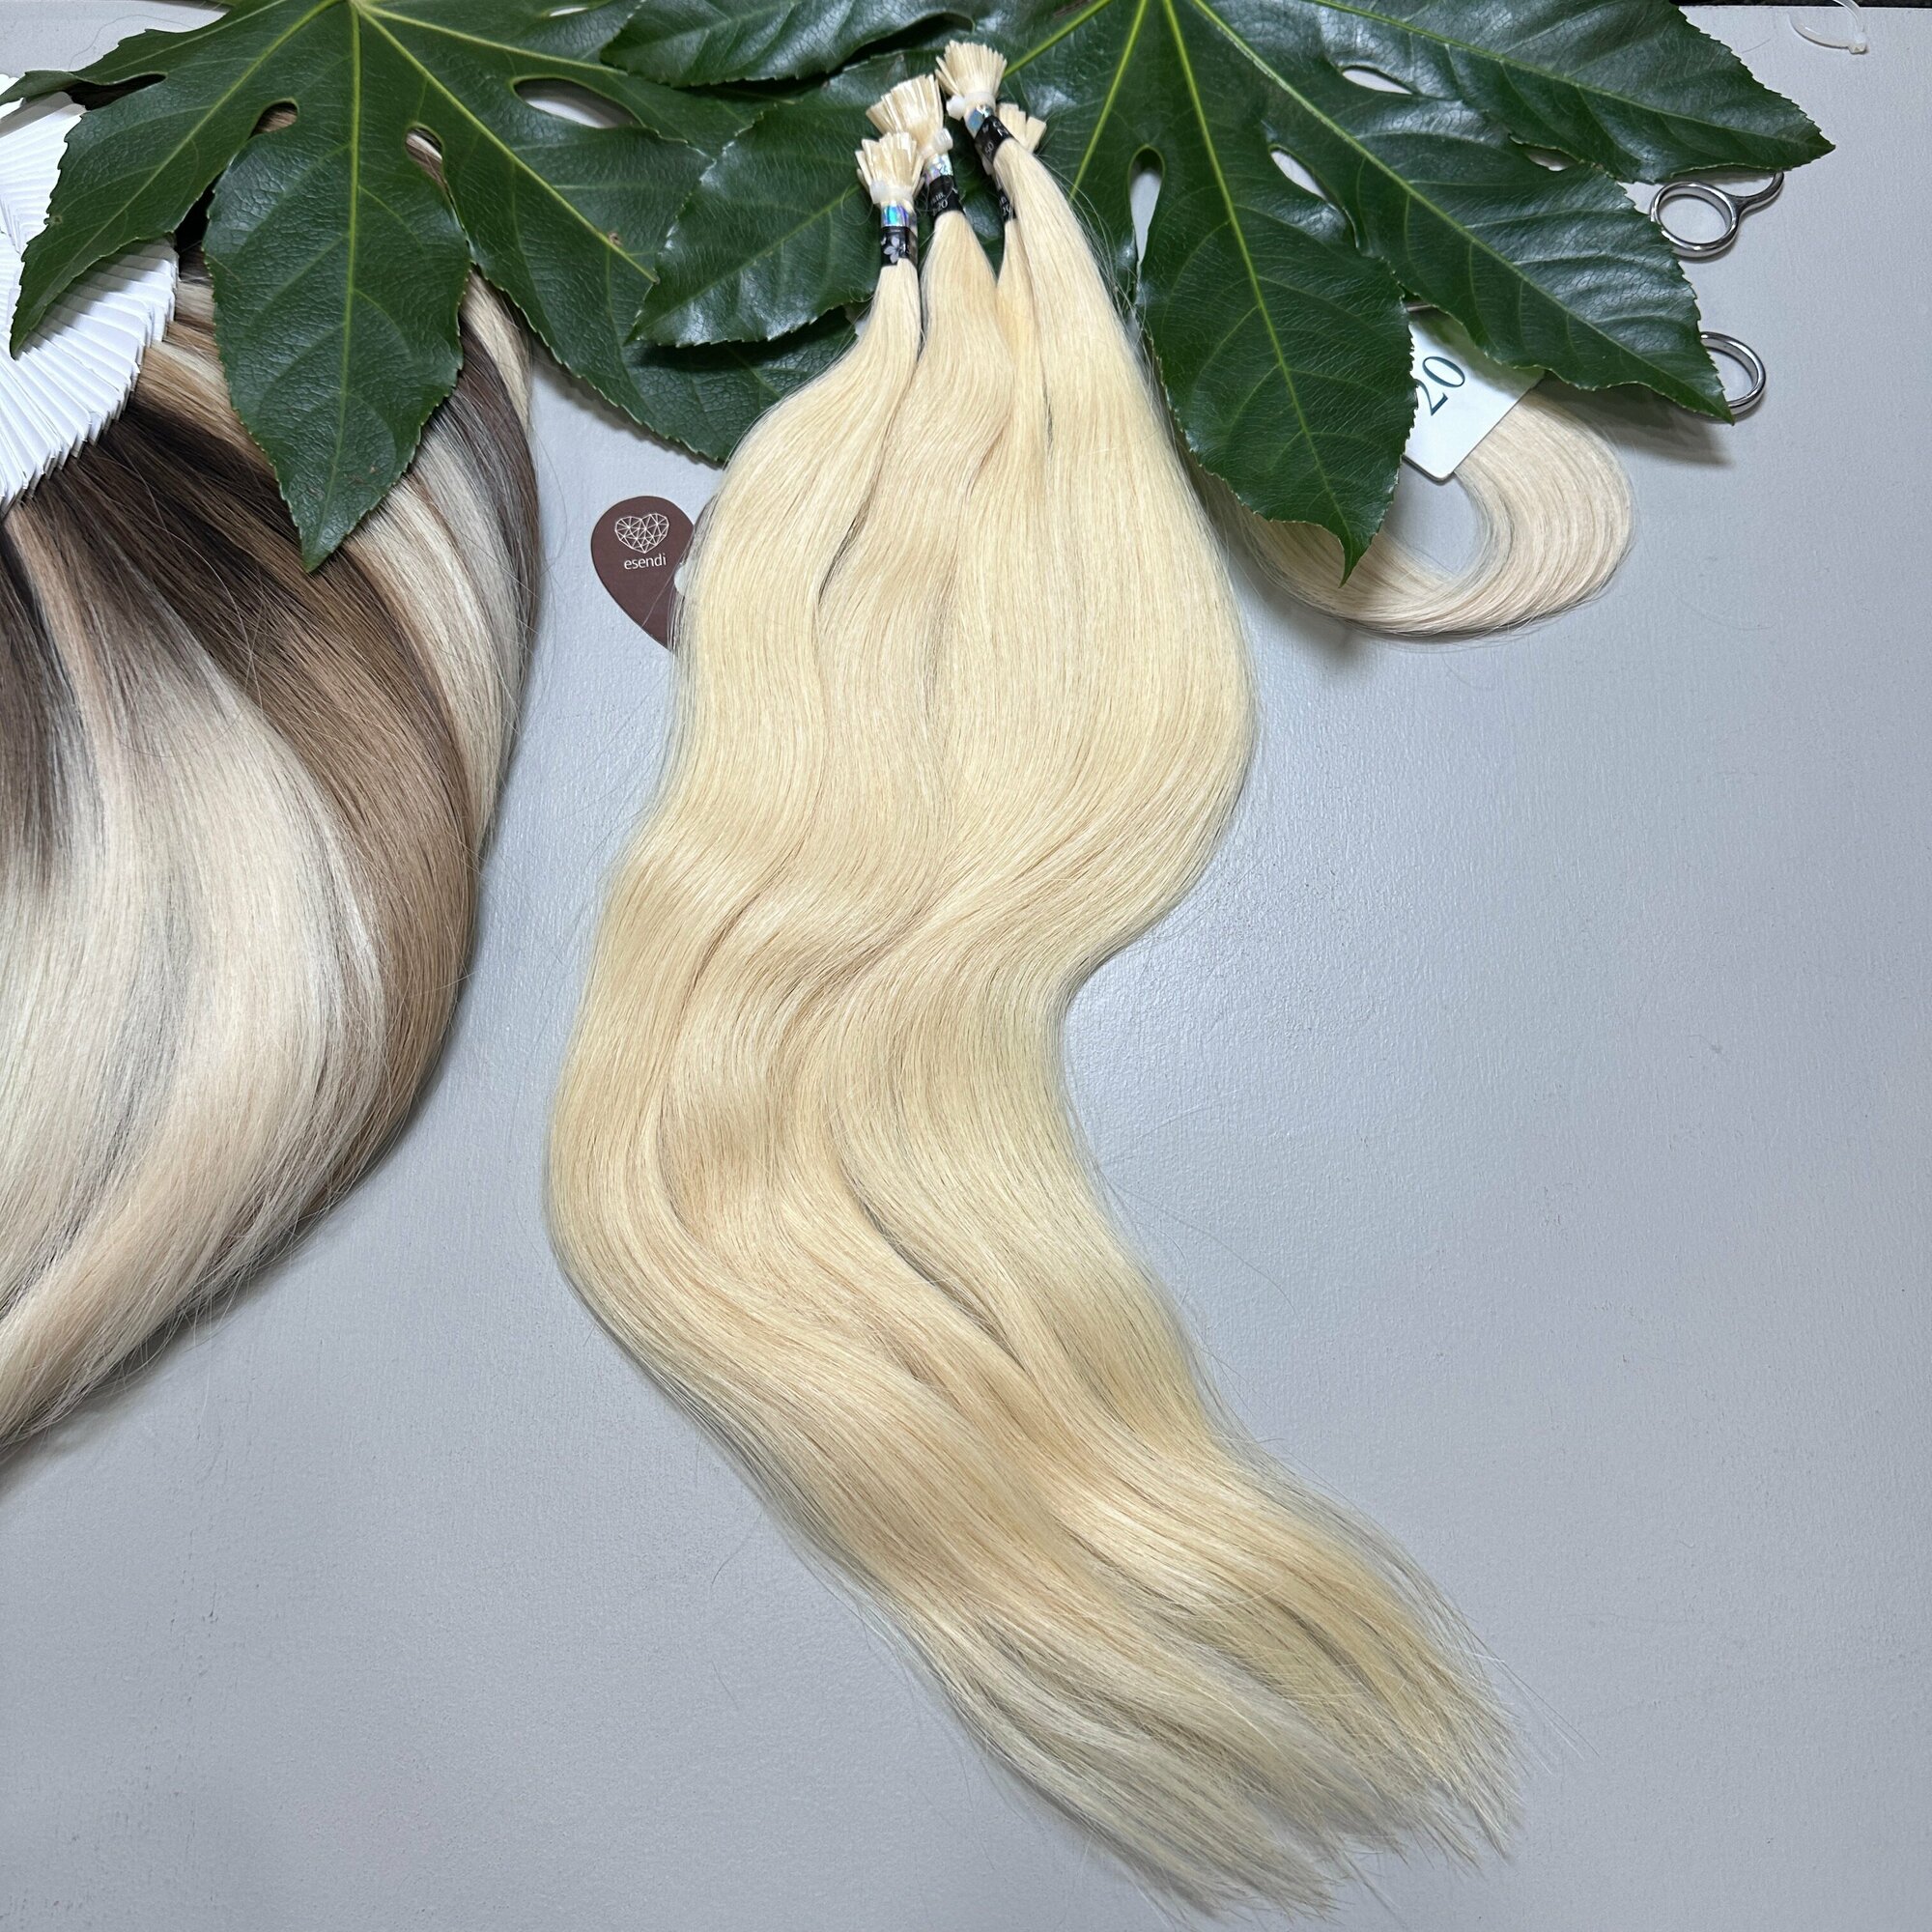 Волосы Belli Capelli славянские стандарт на классической капсуле 45 см №20 (25 капсул)